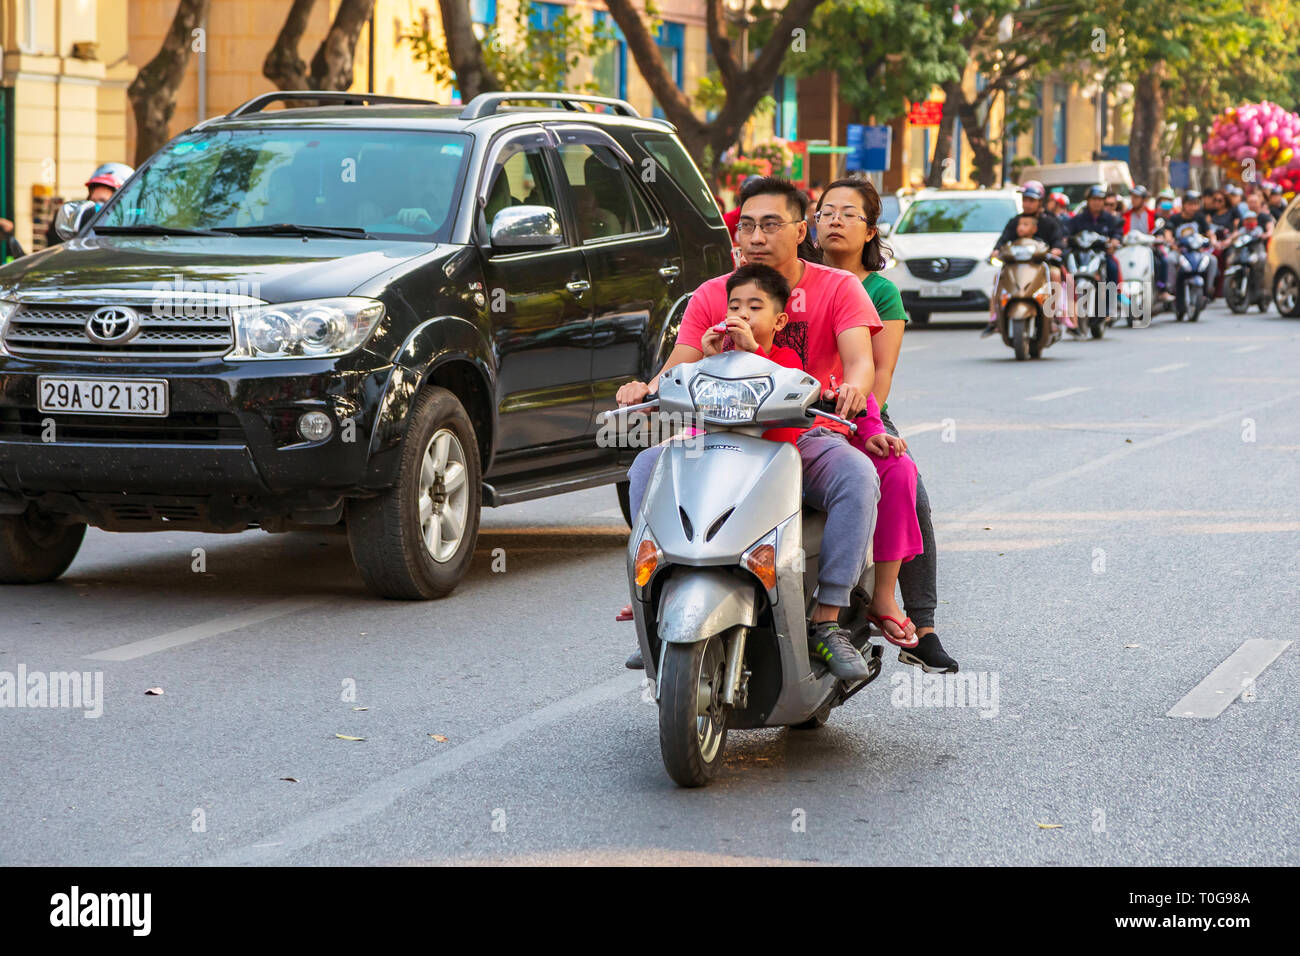 Family on a motorcycle, Hanoi, Vietnam, Asia Stock Photo